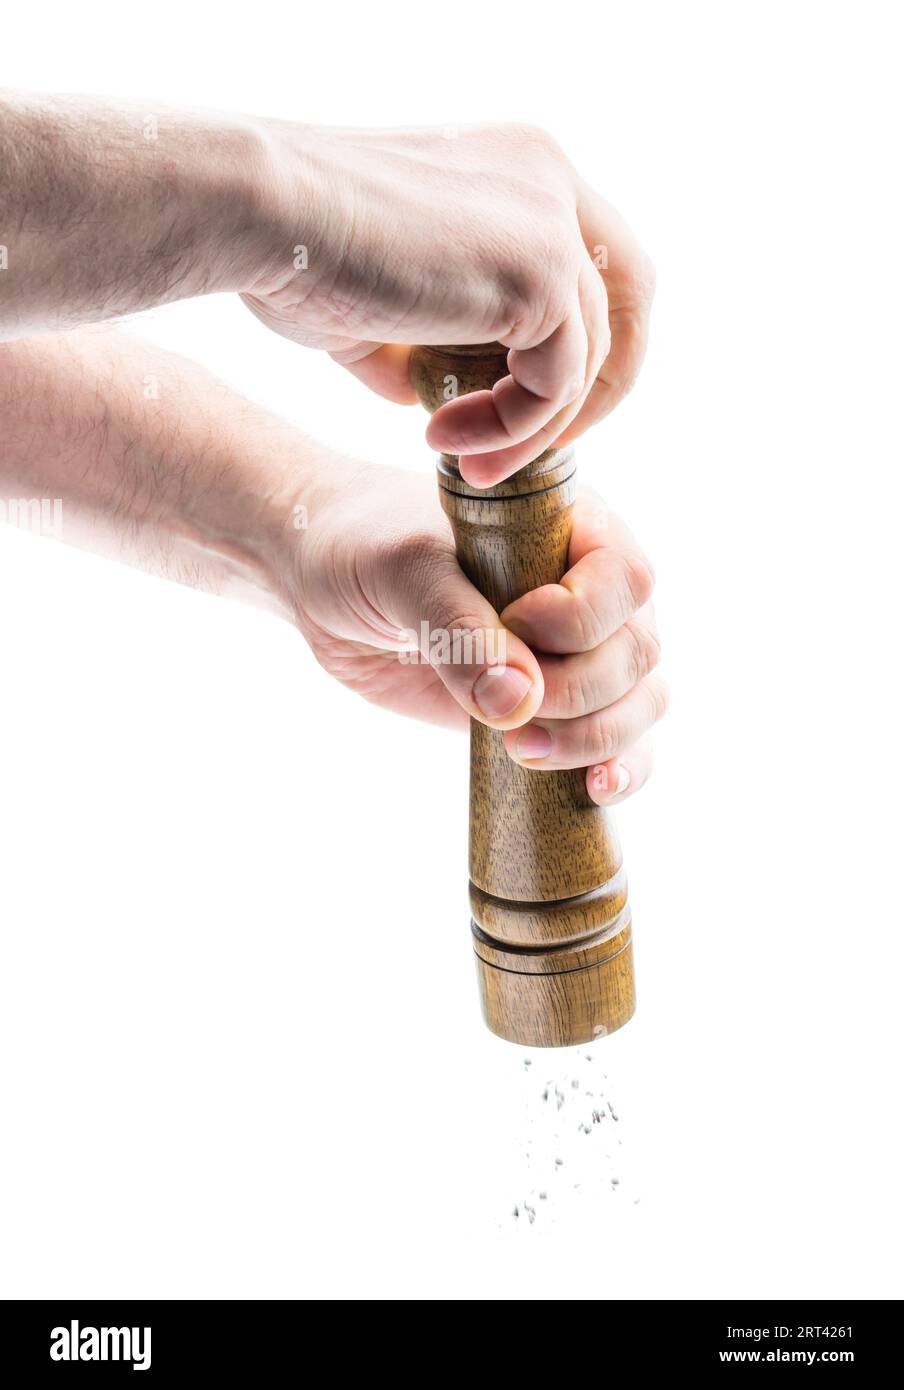 Hands  holding Pepper shaker isolated on white background Stock Photo